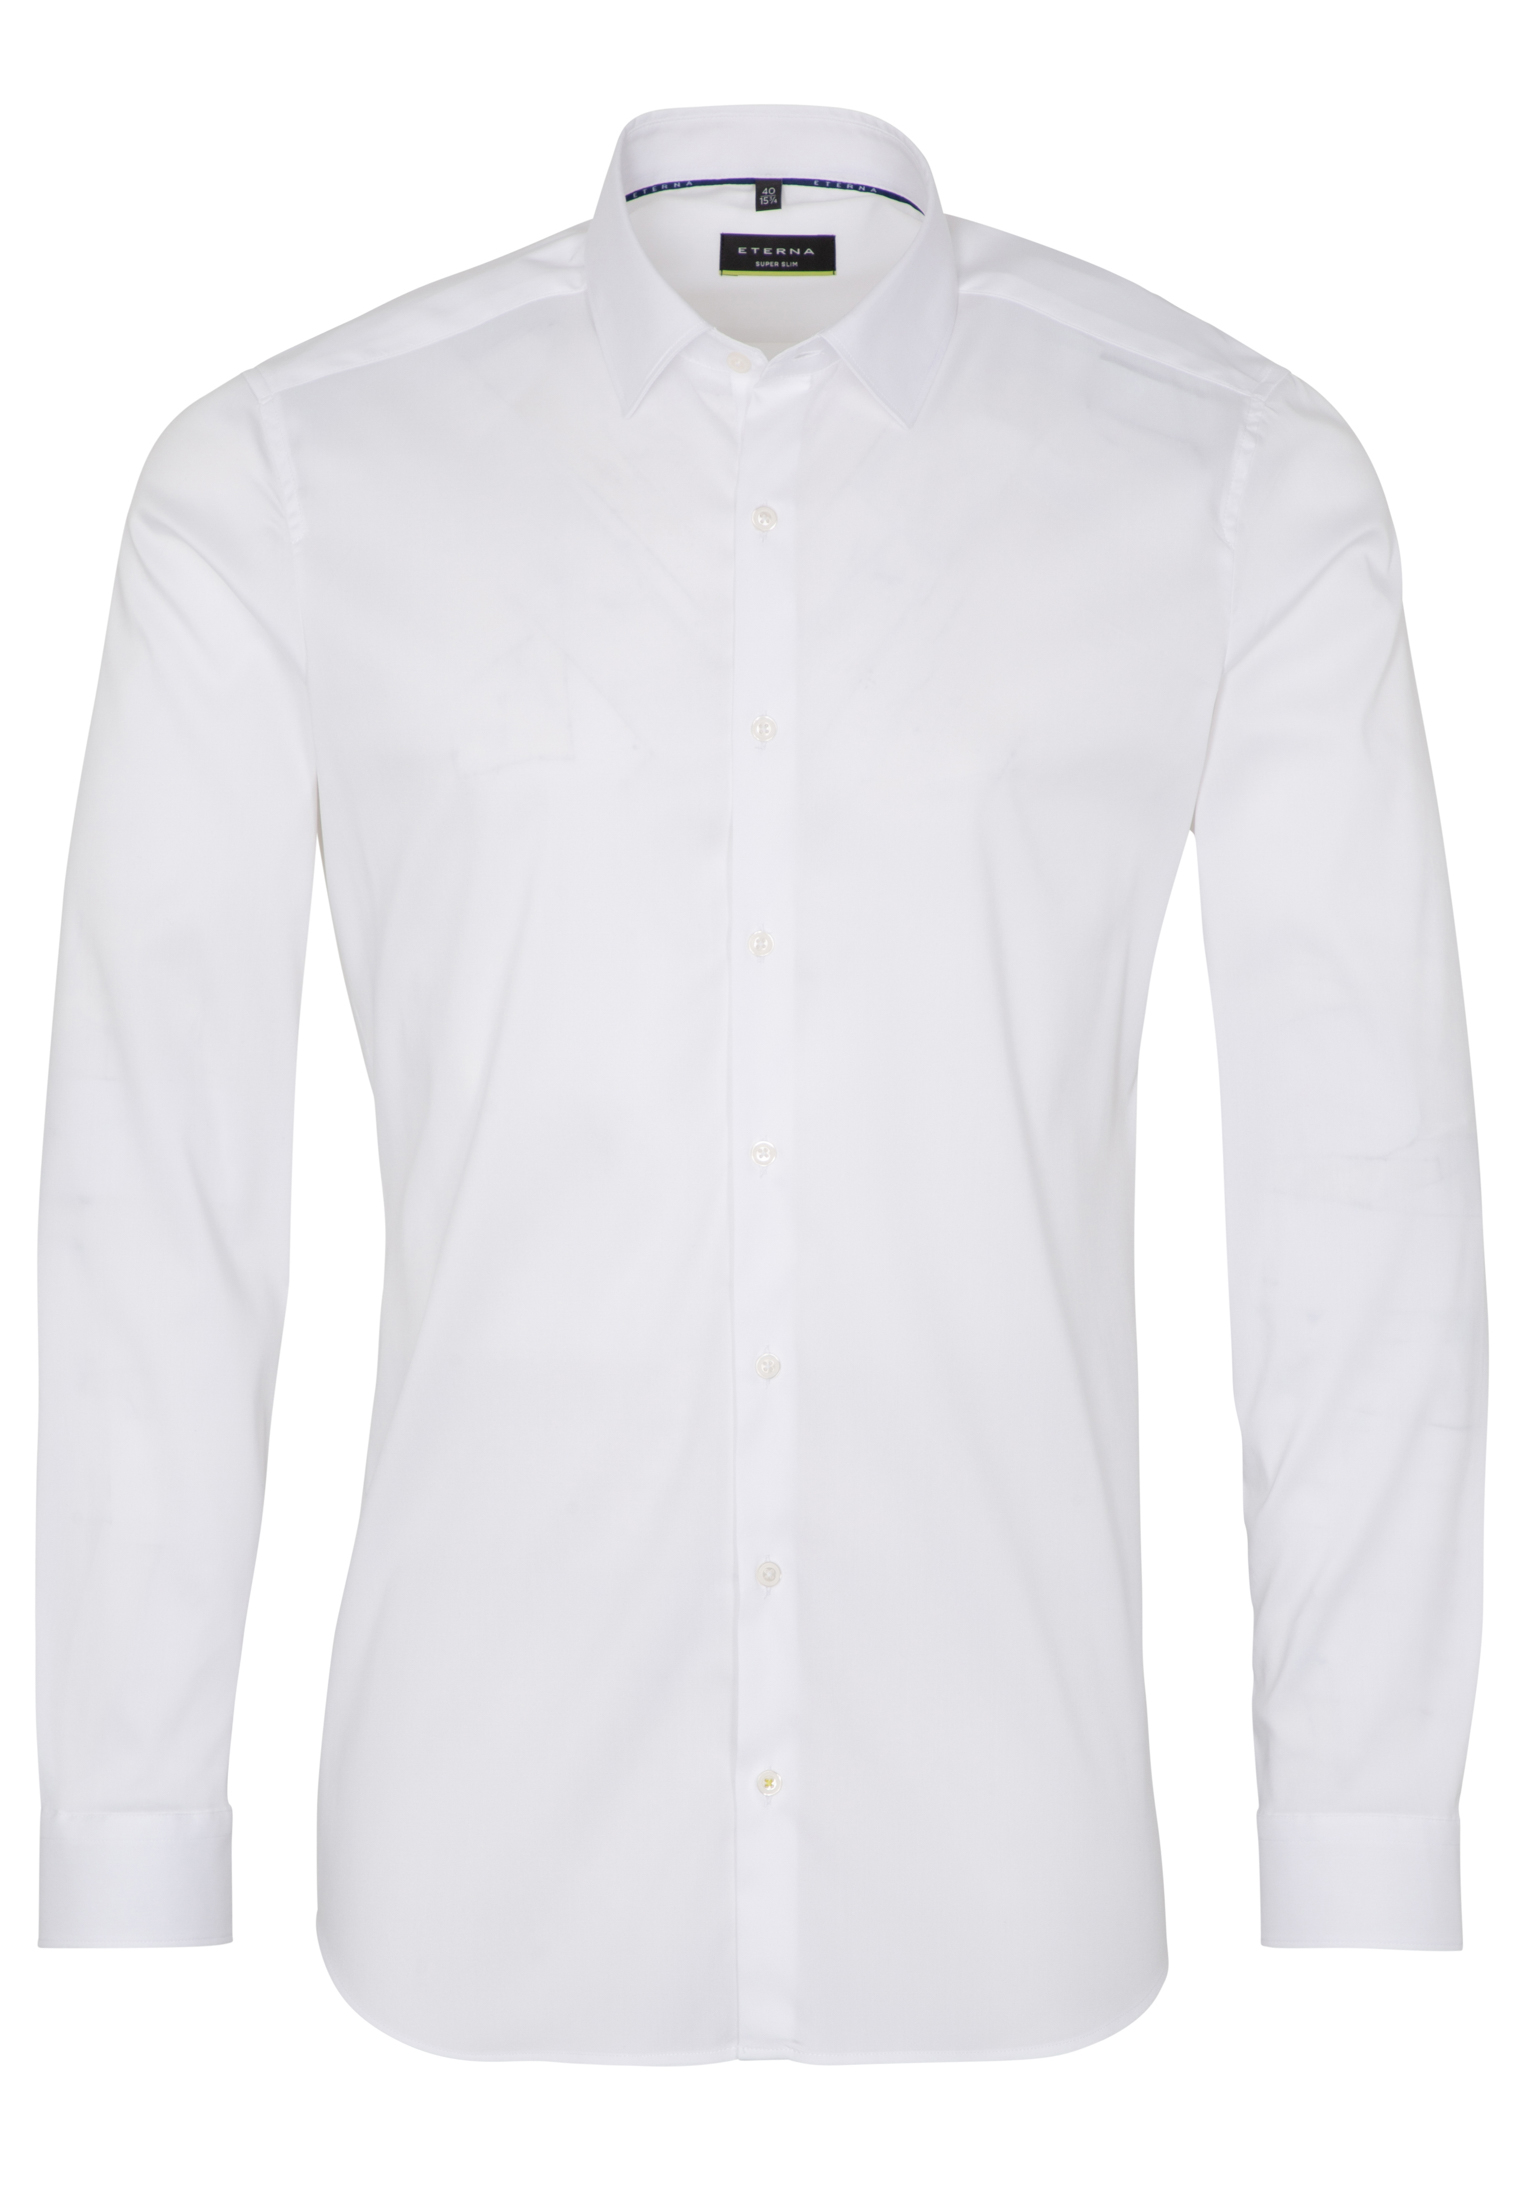 SUPER SLIM Performance Shirt blanc uni